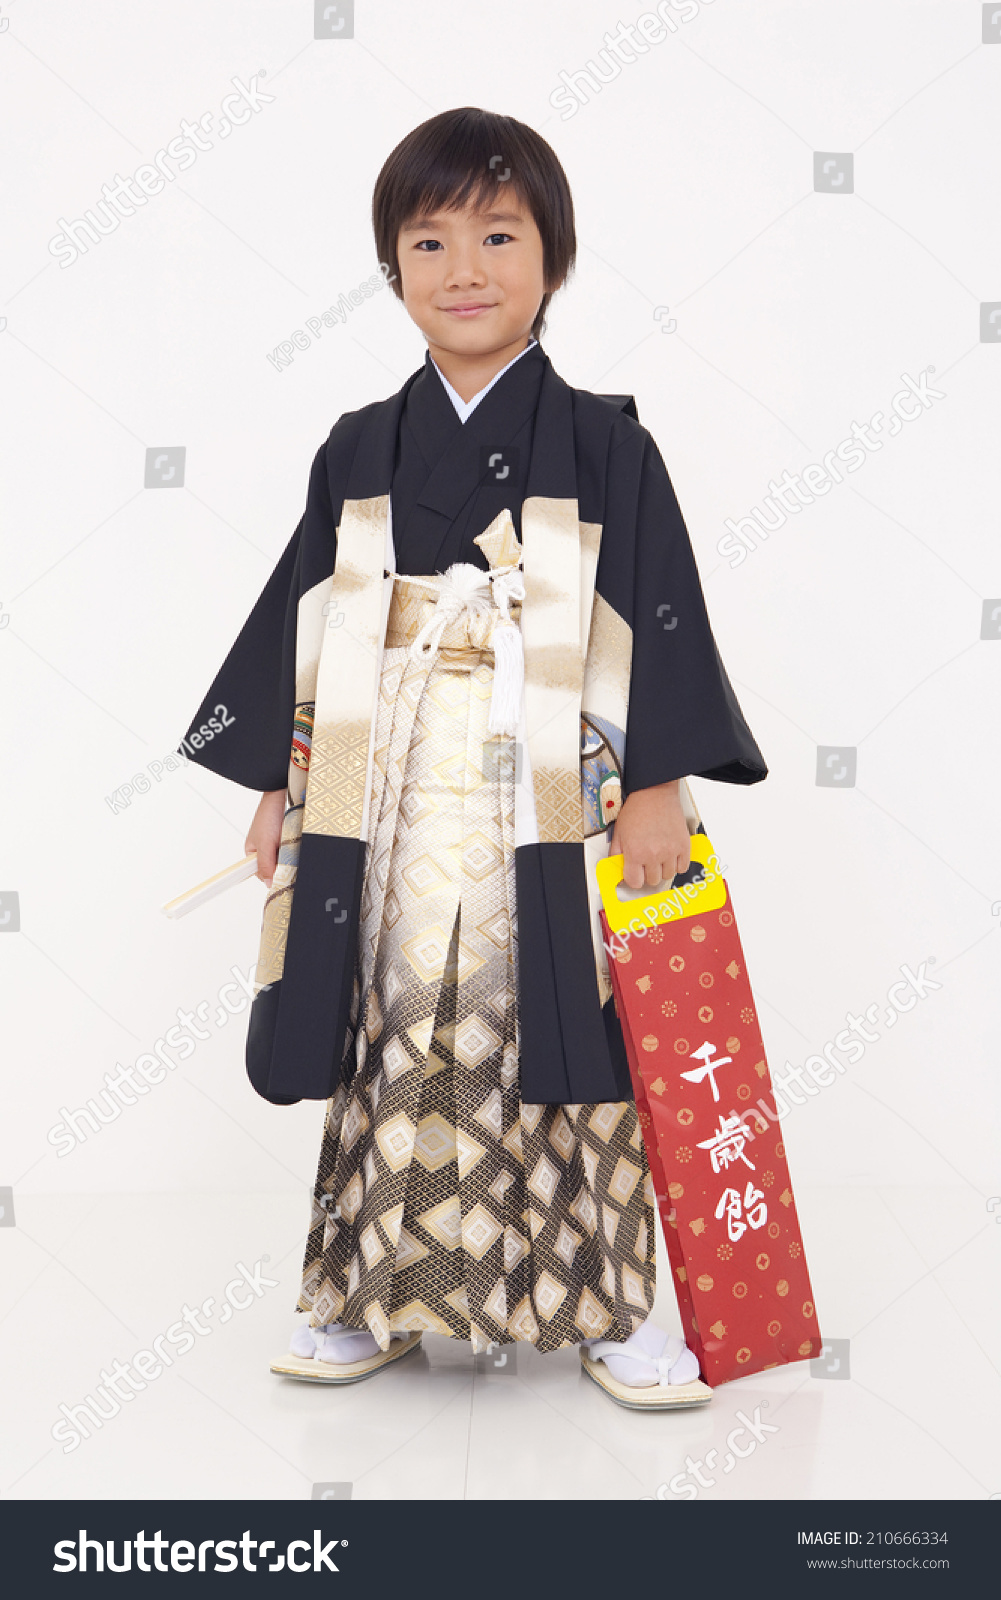 Boy Wearing Kimono Stock Photo 210666334 - Shutterstock